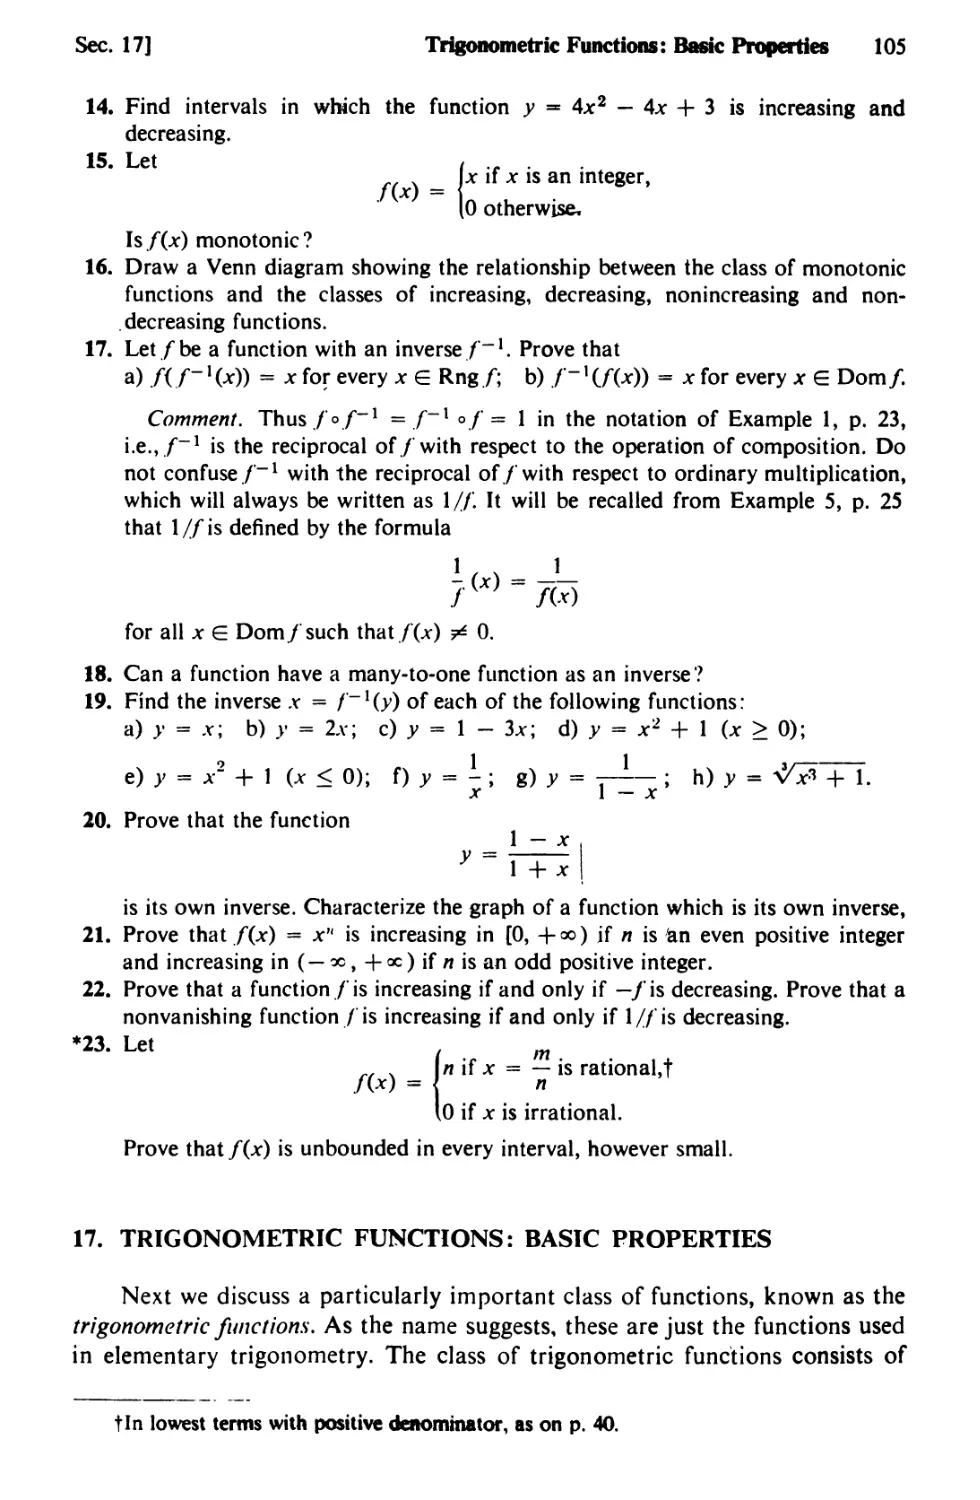 17. Trigonometric Functions: Basic Properties